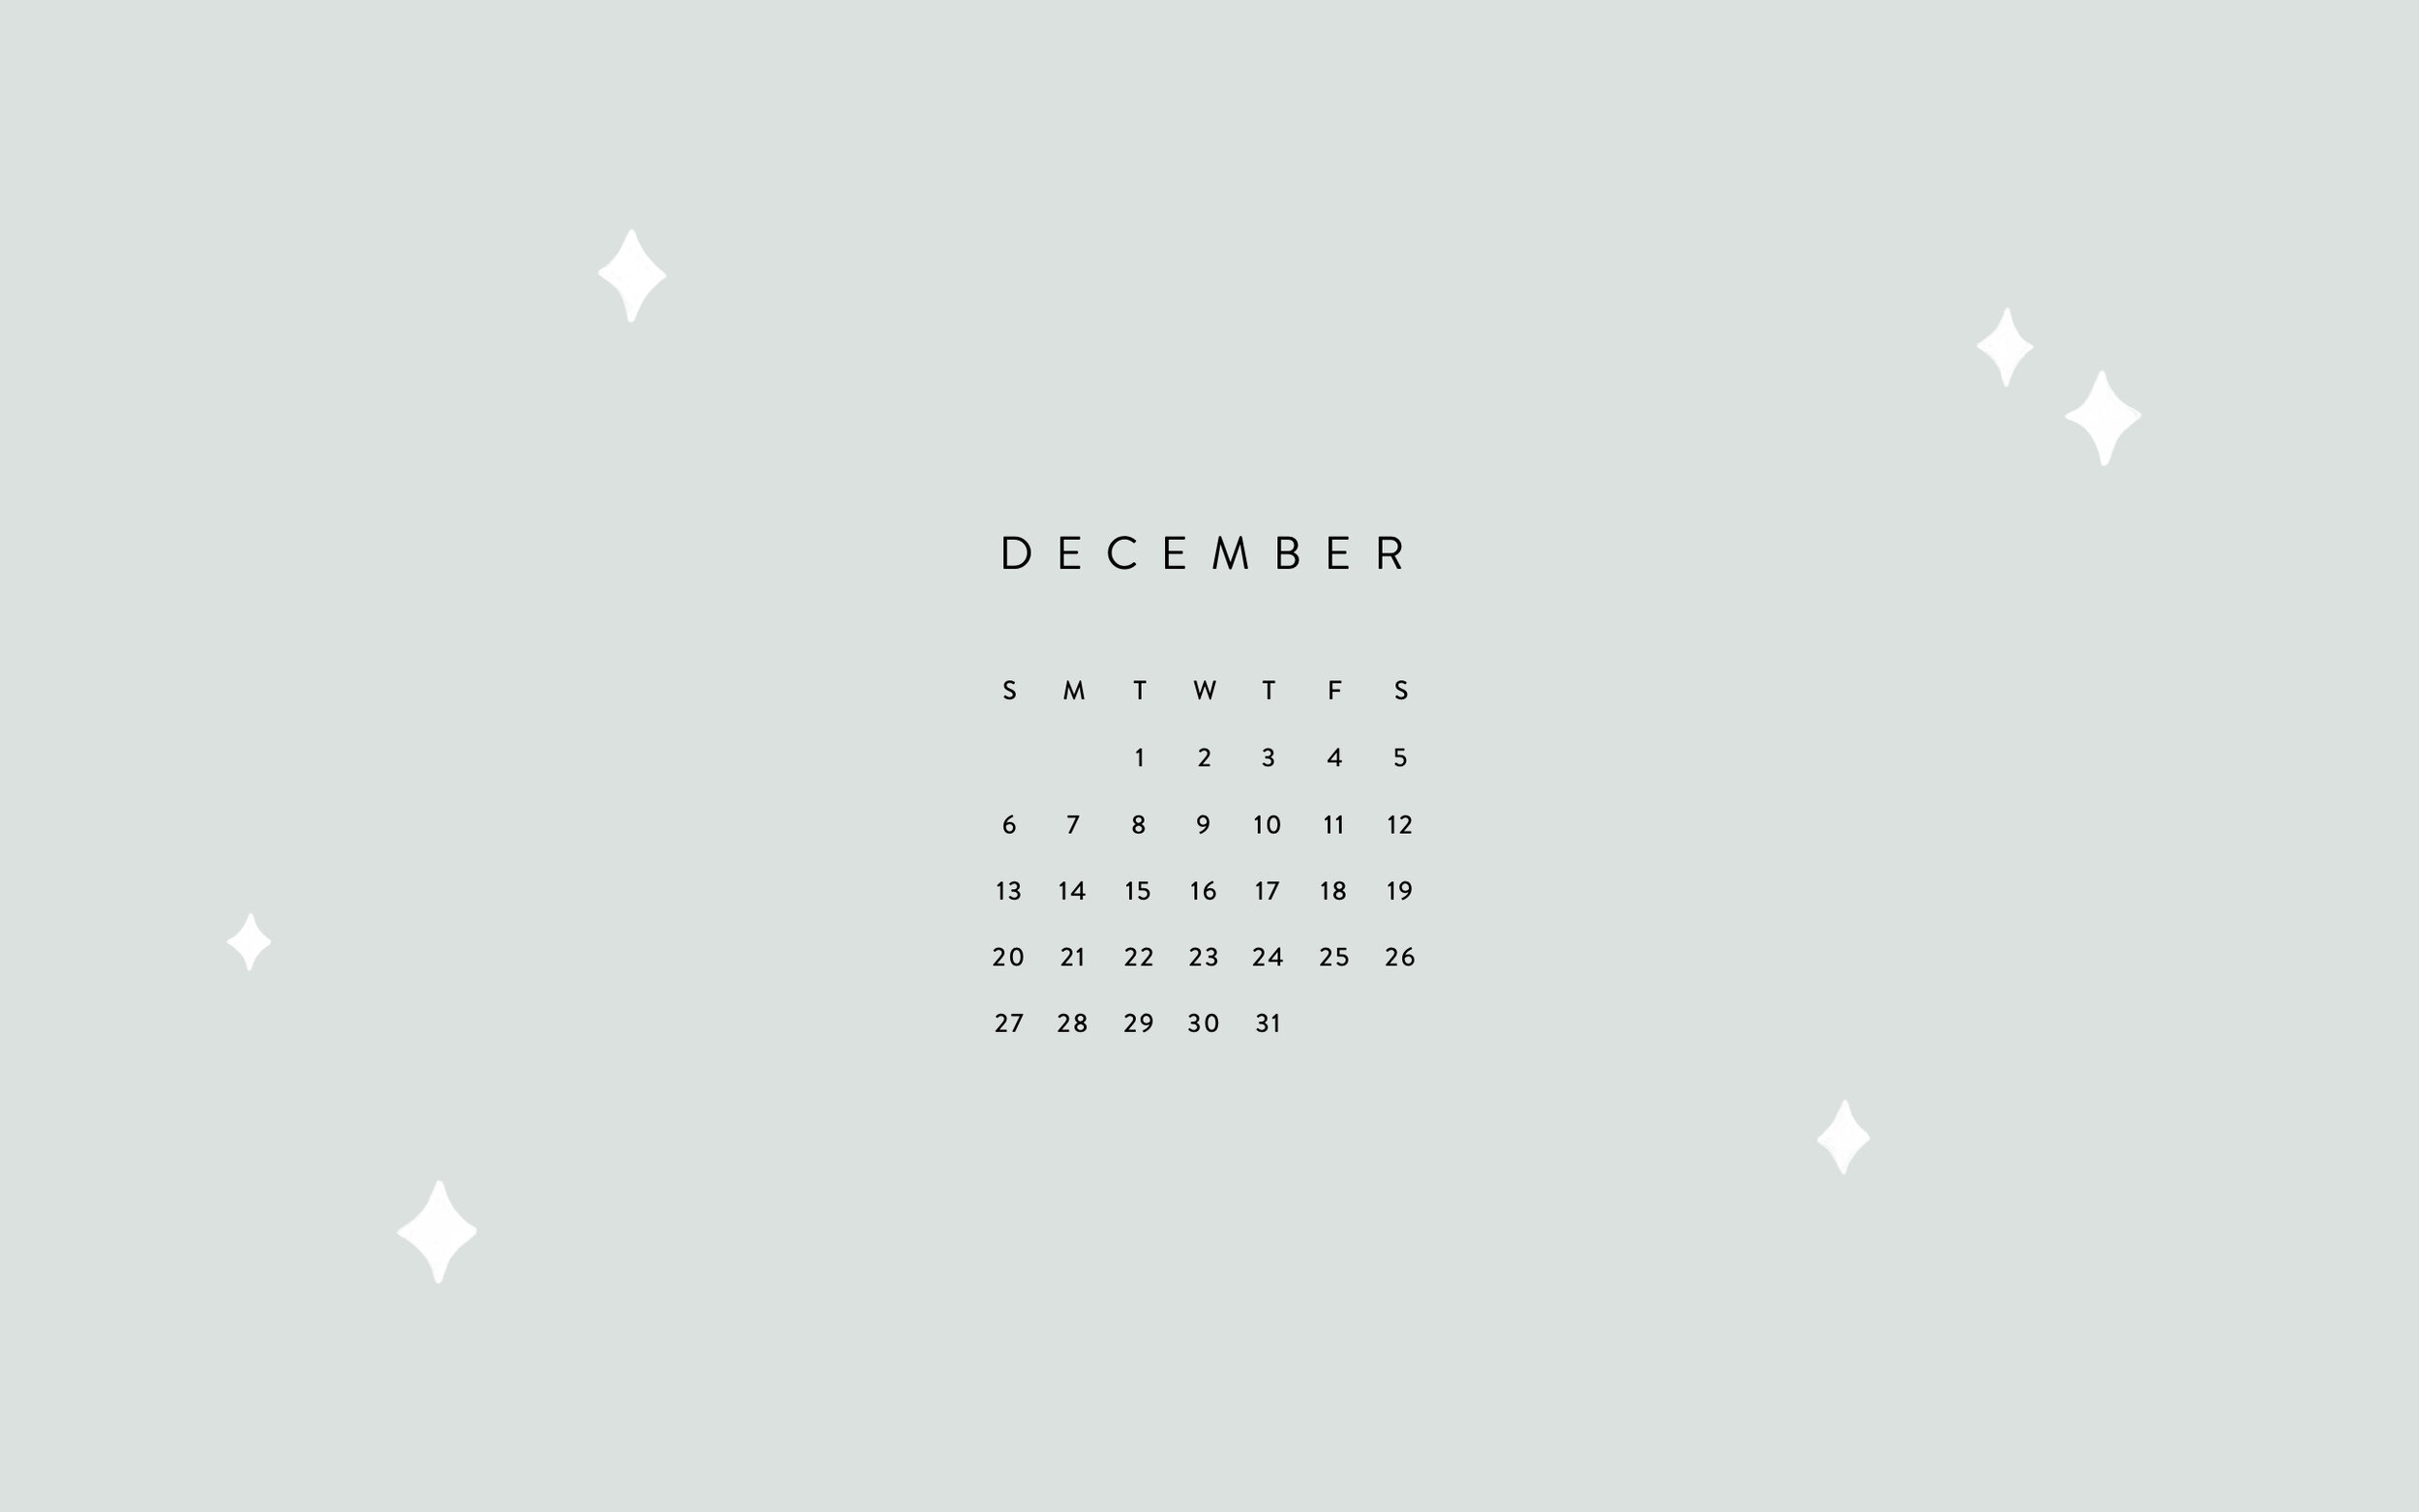 December Desktop and Mobile Wallpaper  sonrisastudiocom